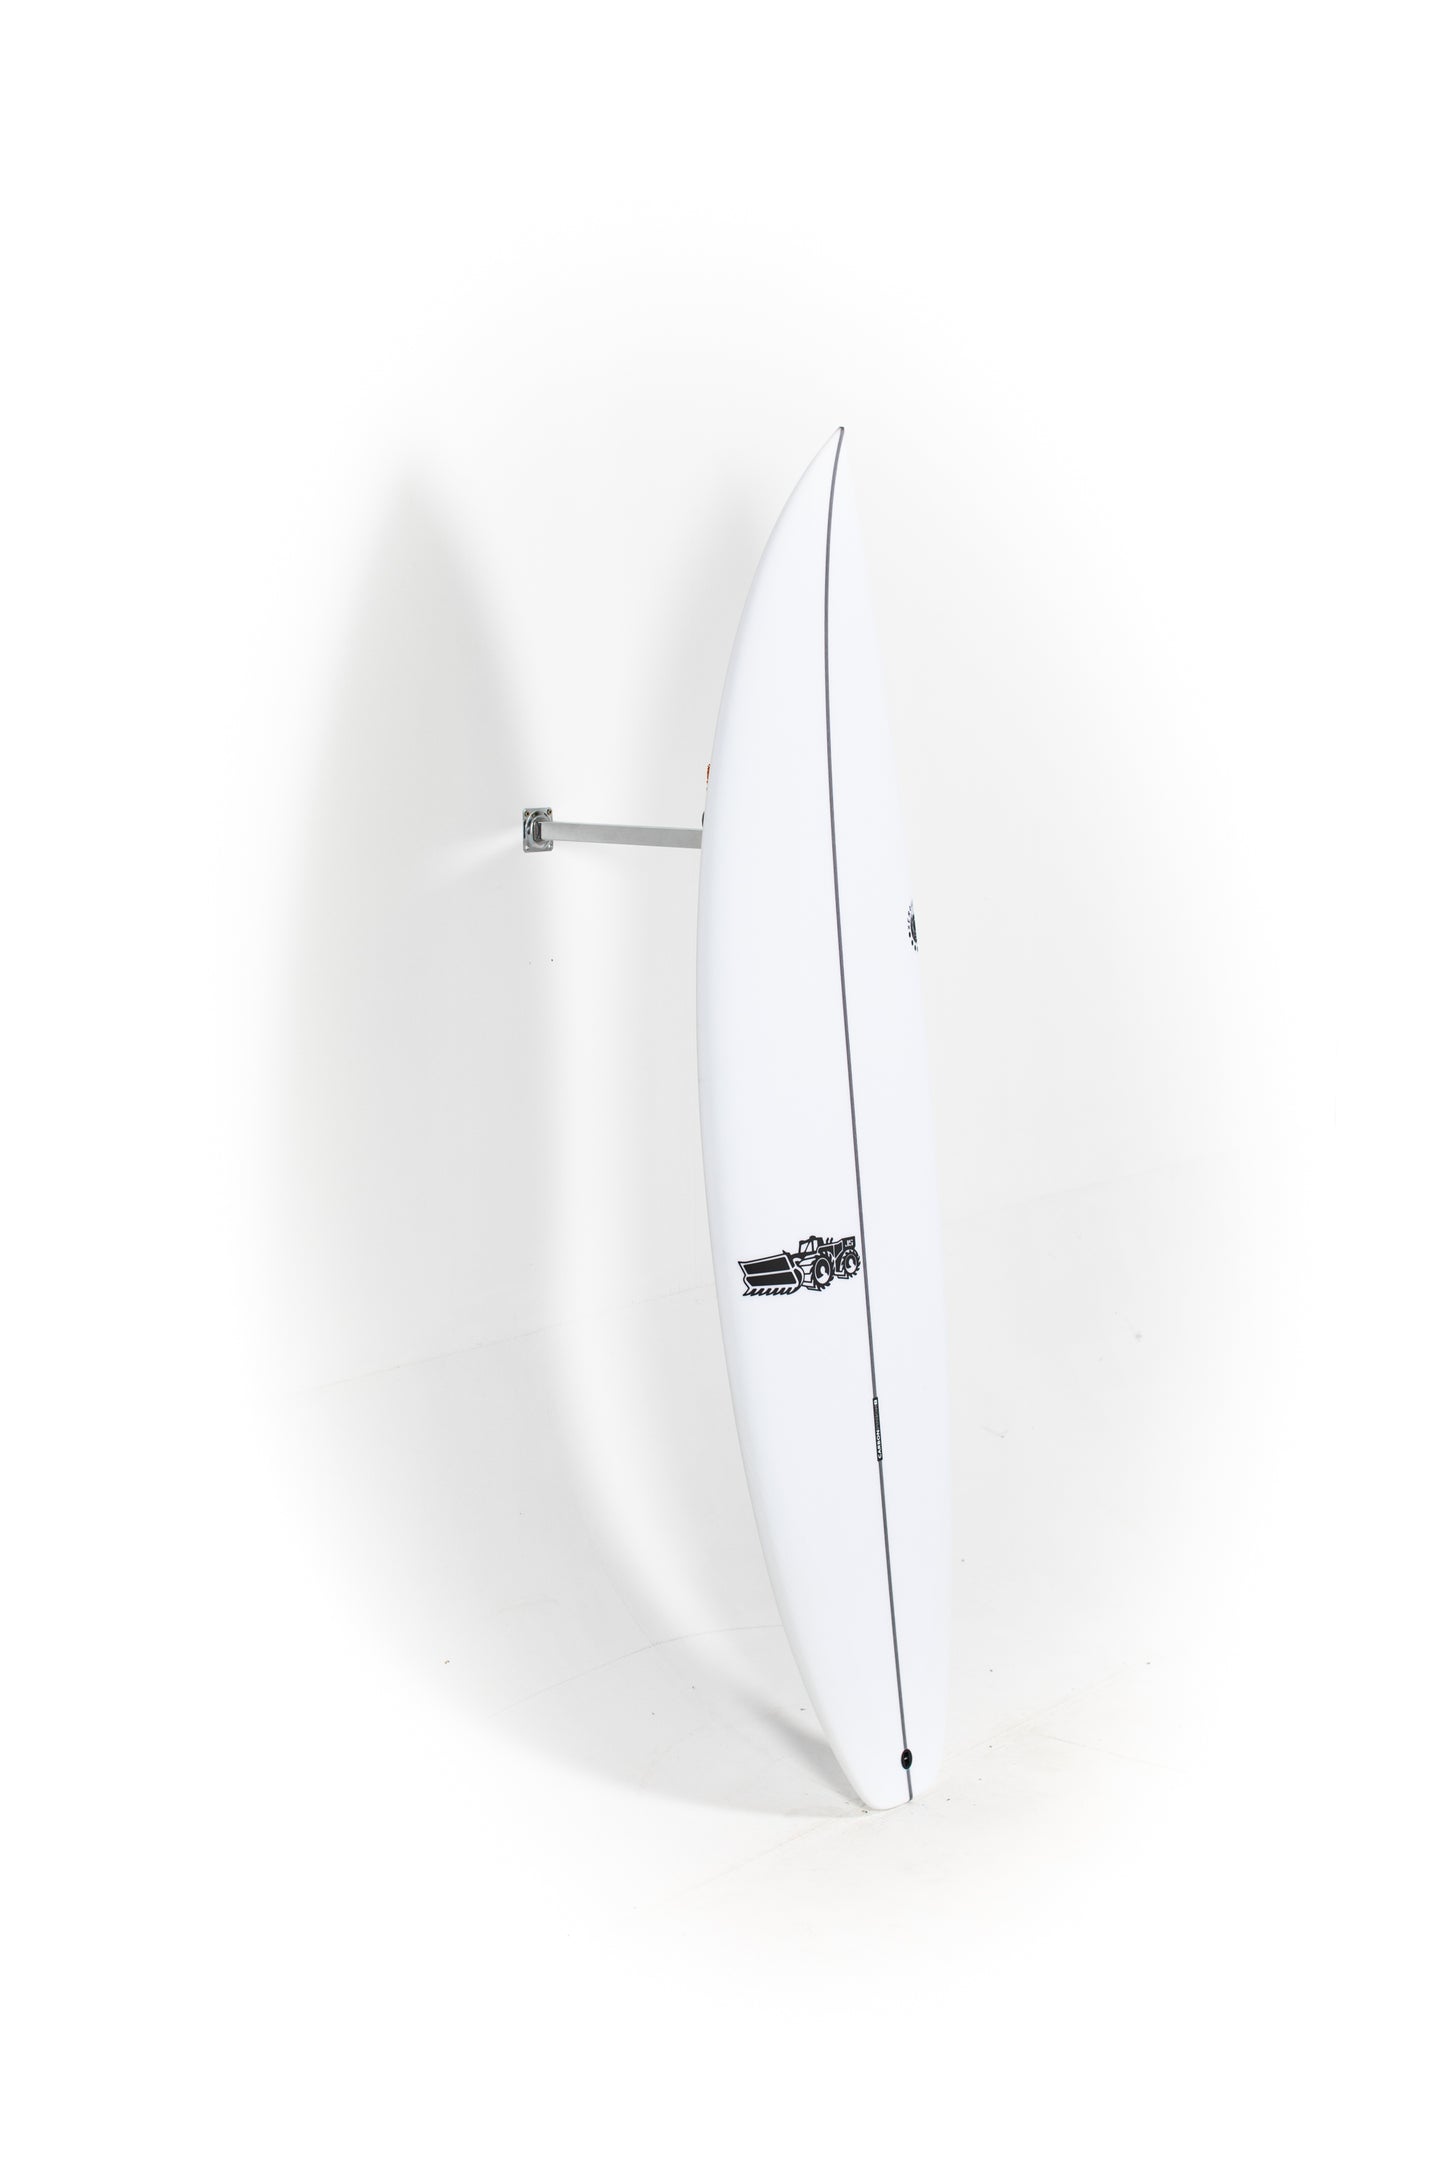 
                  
                    Pukas Surf Shop - JS Surfboards - XERO GRAVITY - 5'10" x 19.25" x 2.38" x 28.6L. - XEROGRAVITY
                  
                